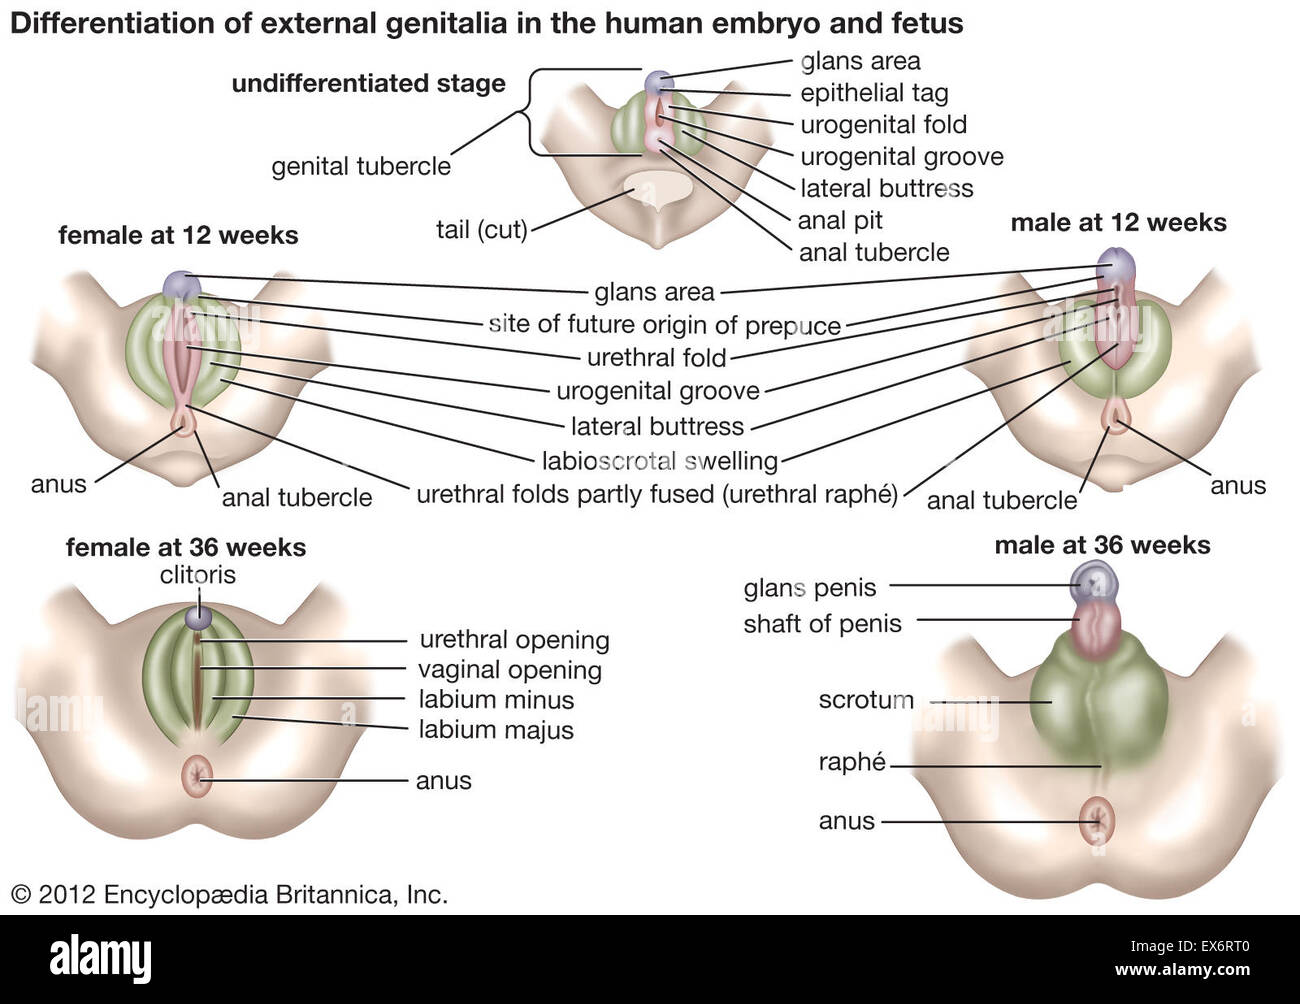 Pictures of hermaphrodite genitalia on humans